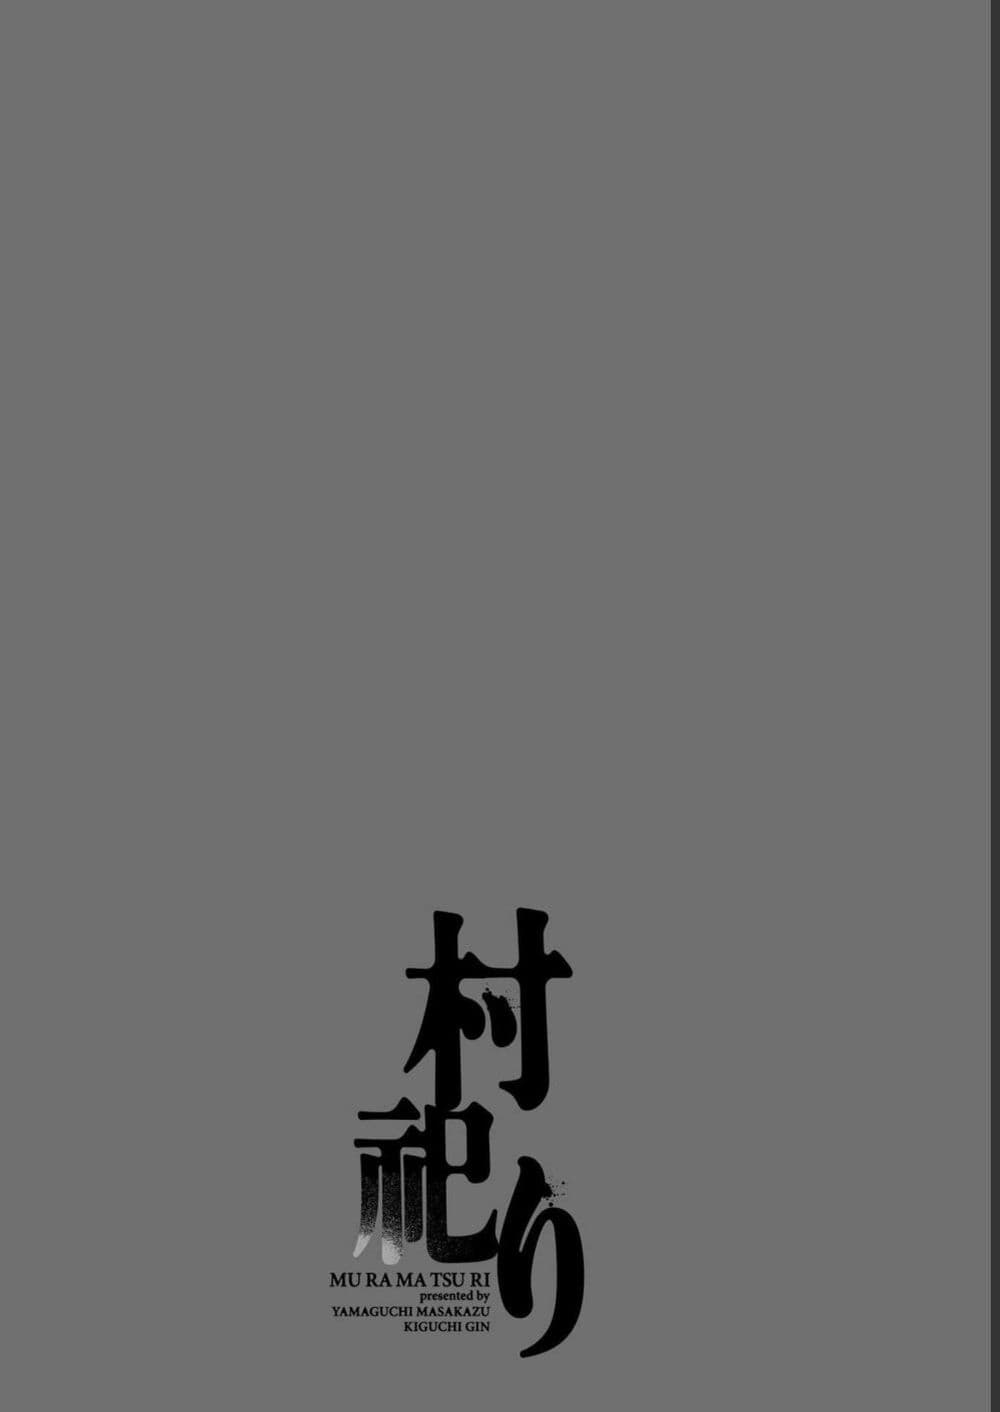 Mura Matsuri 19.13 (21)